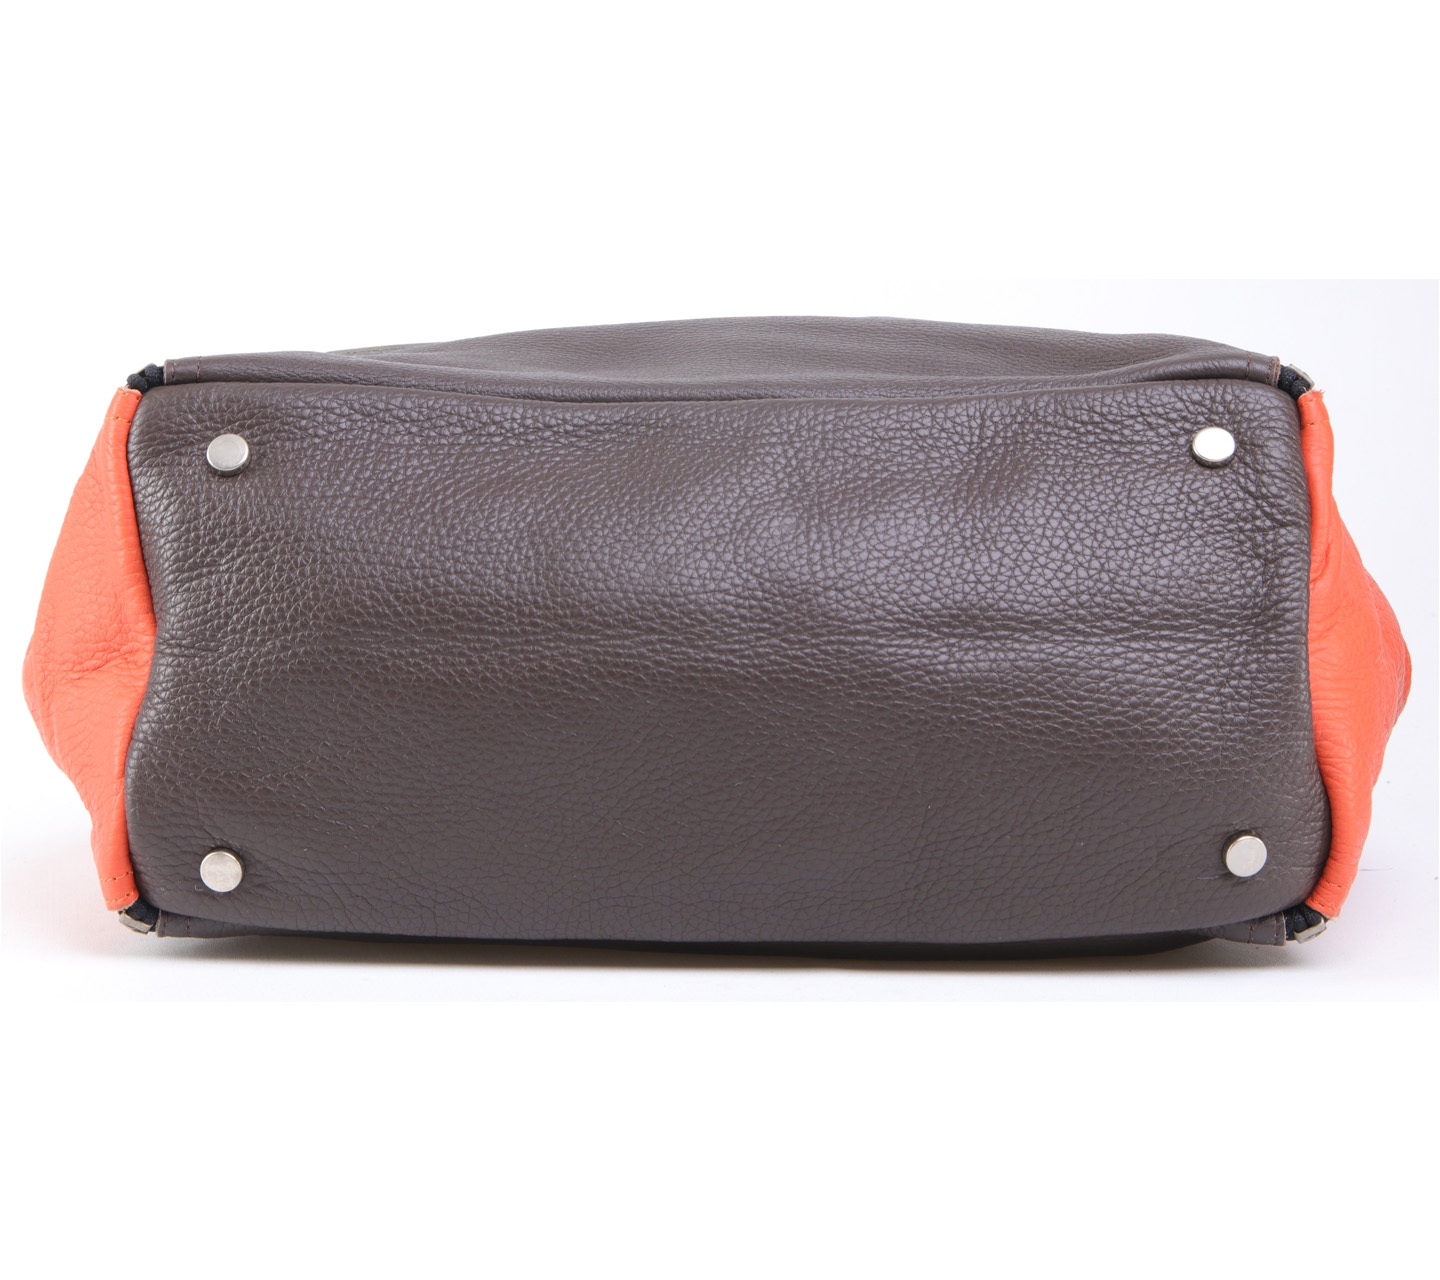 Barbara Rihl 3 Tone Leather Studded 4 Ways Zipper Handbag